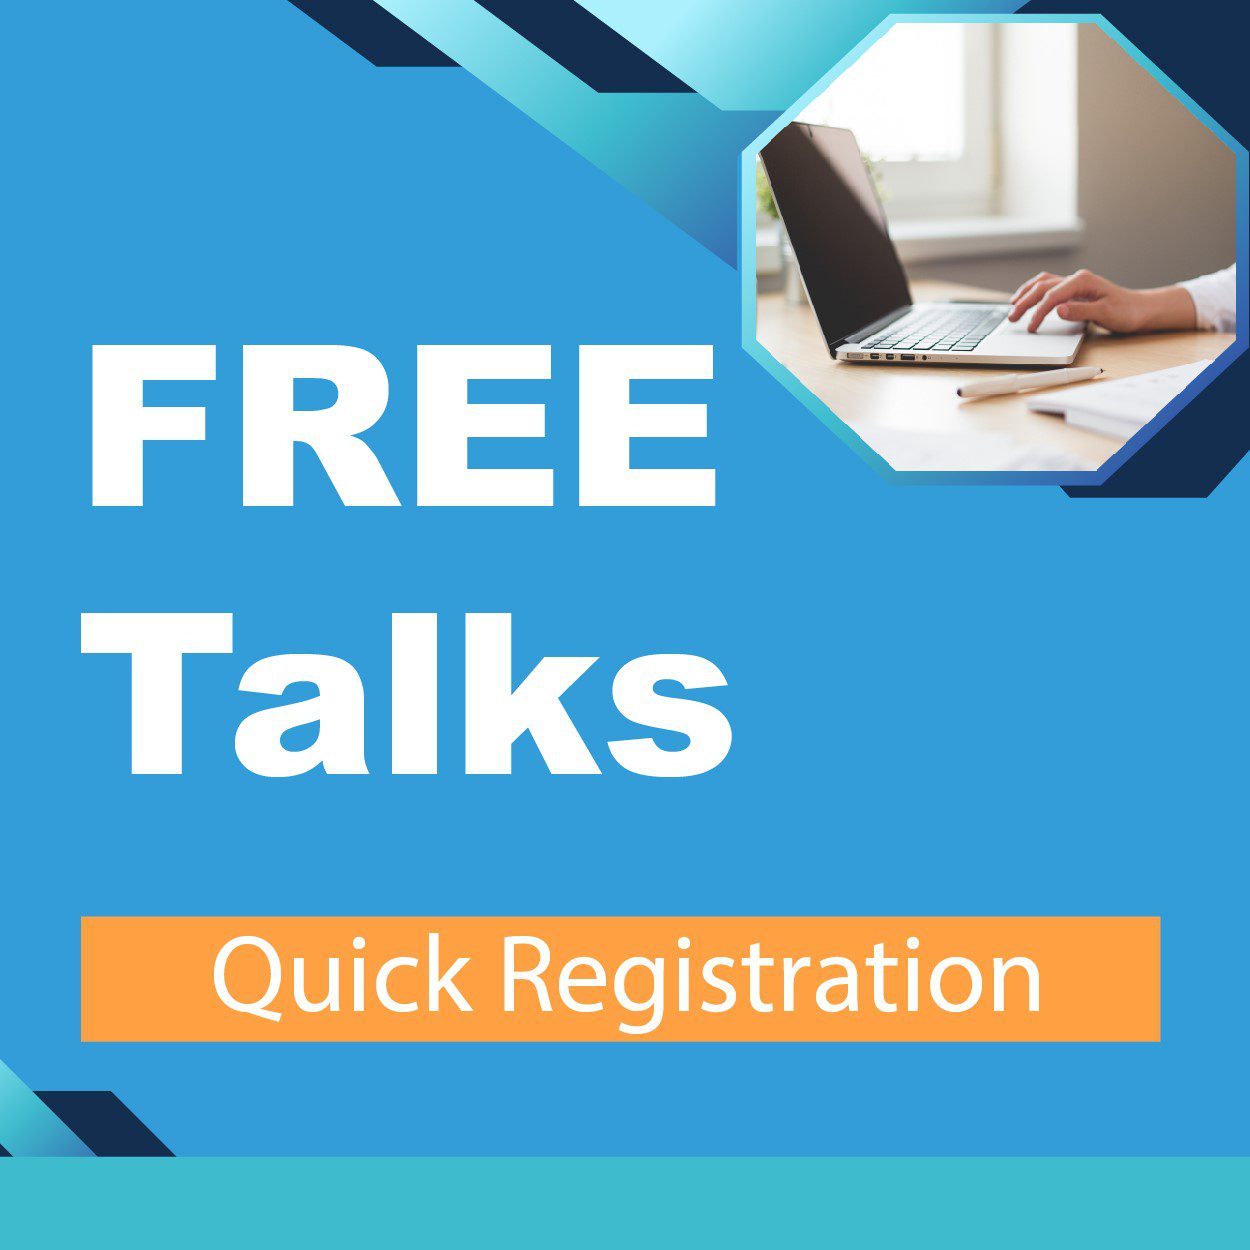 FREE Talks Quick Registration